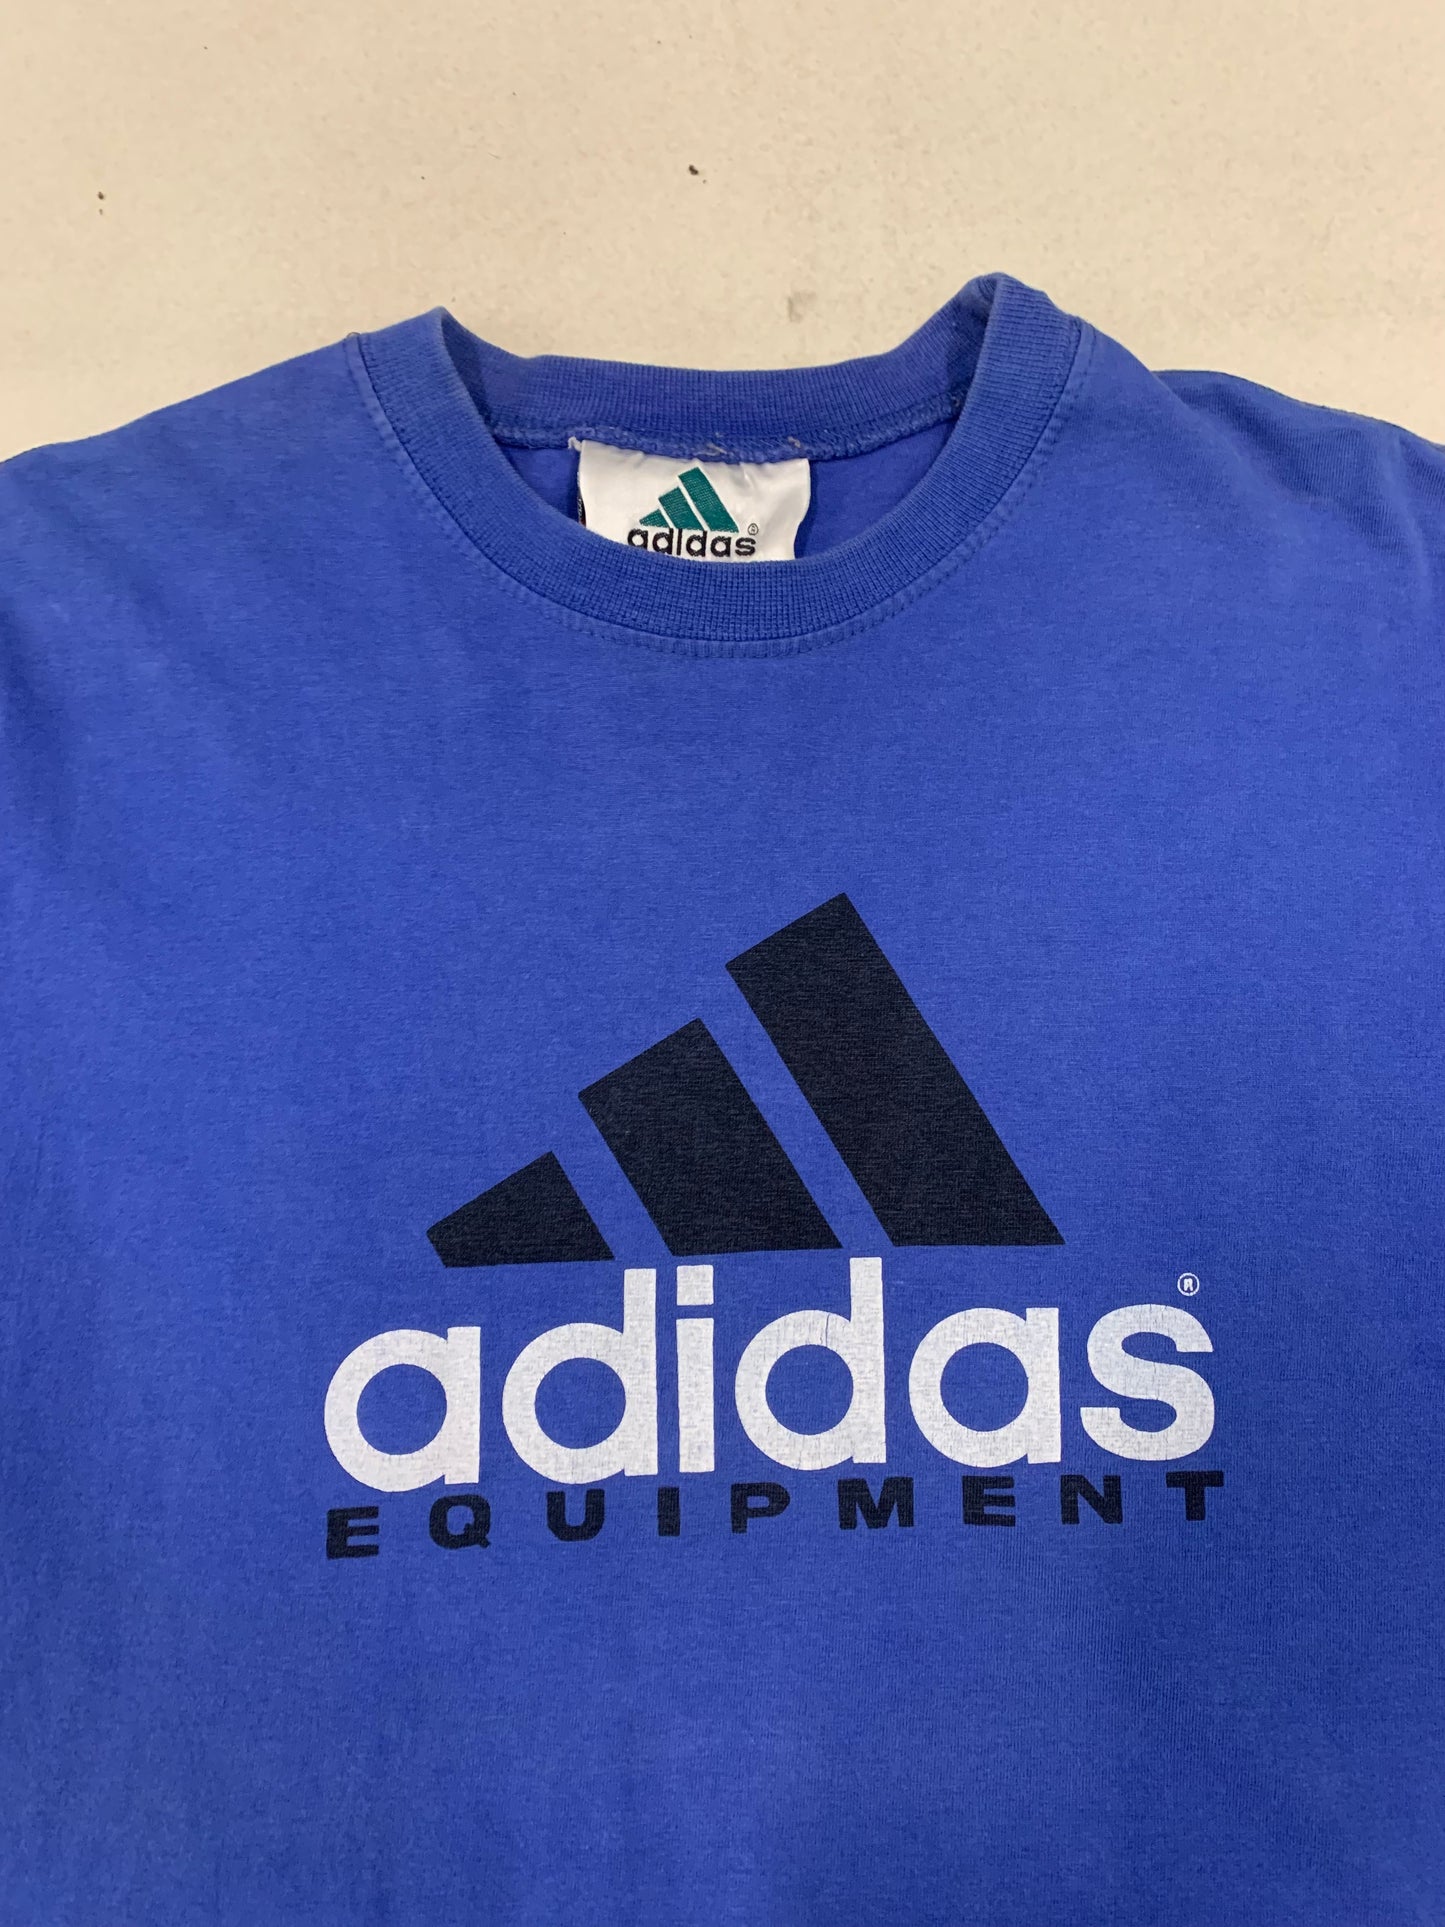 Camiseta Vintage Adidas Equipment 90’s -S